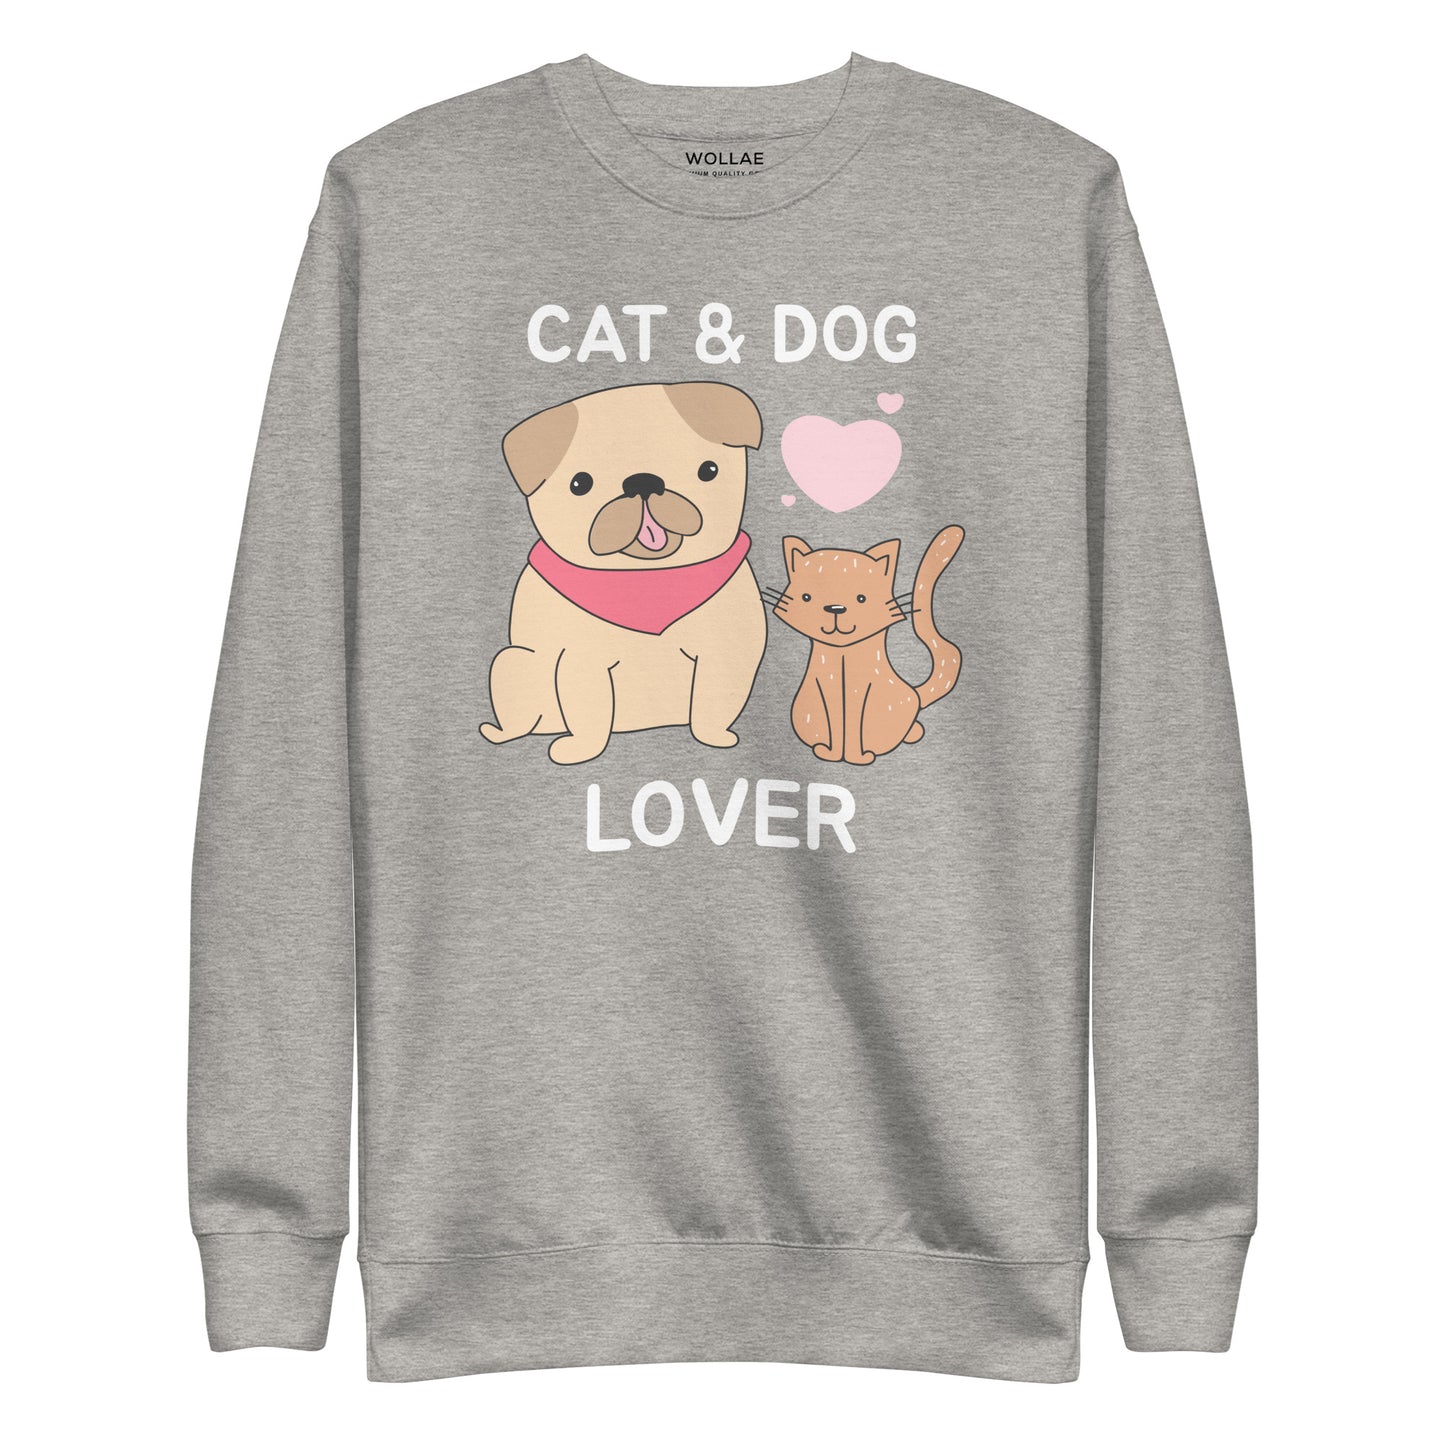 Cat & Dog Lover Sweatshirt